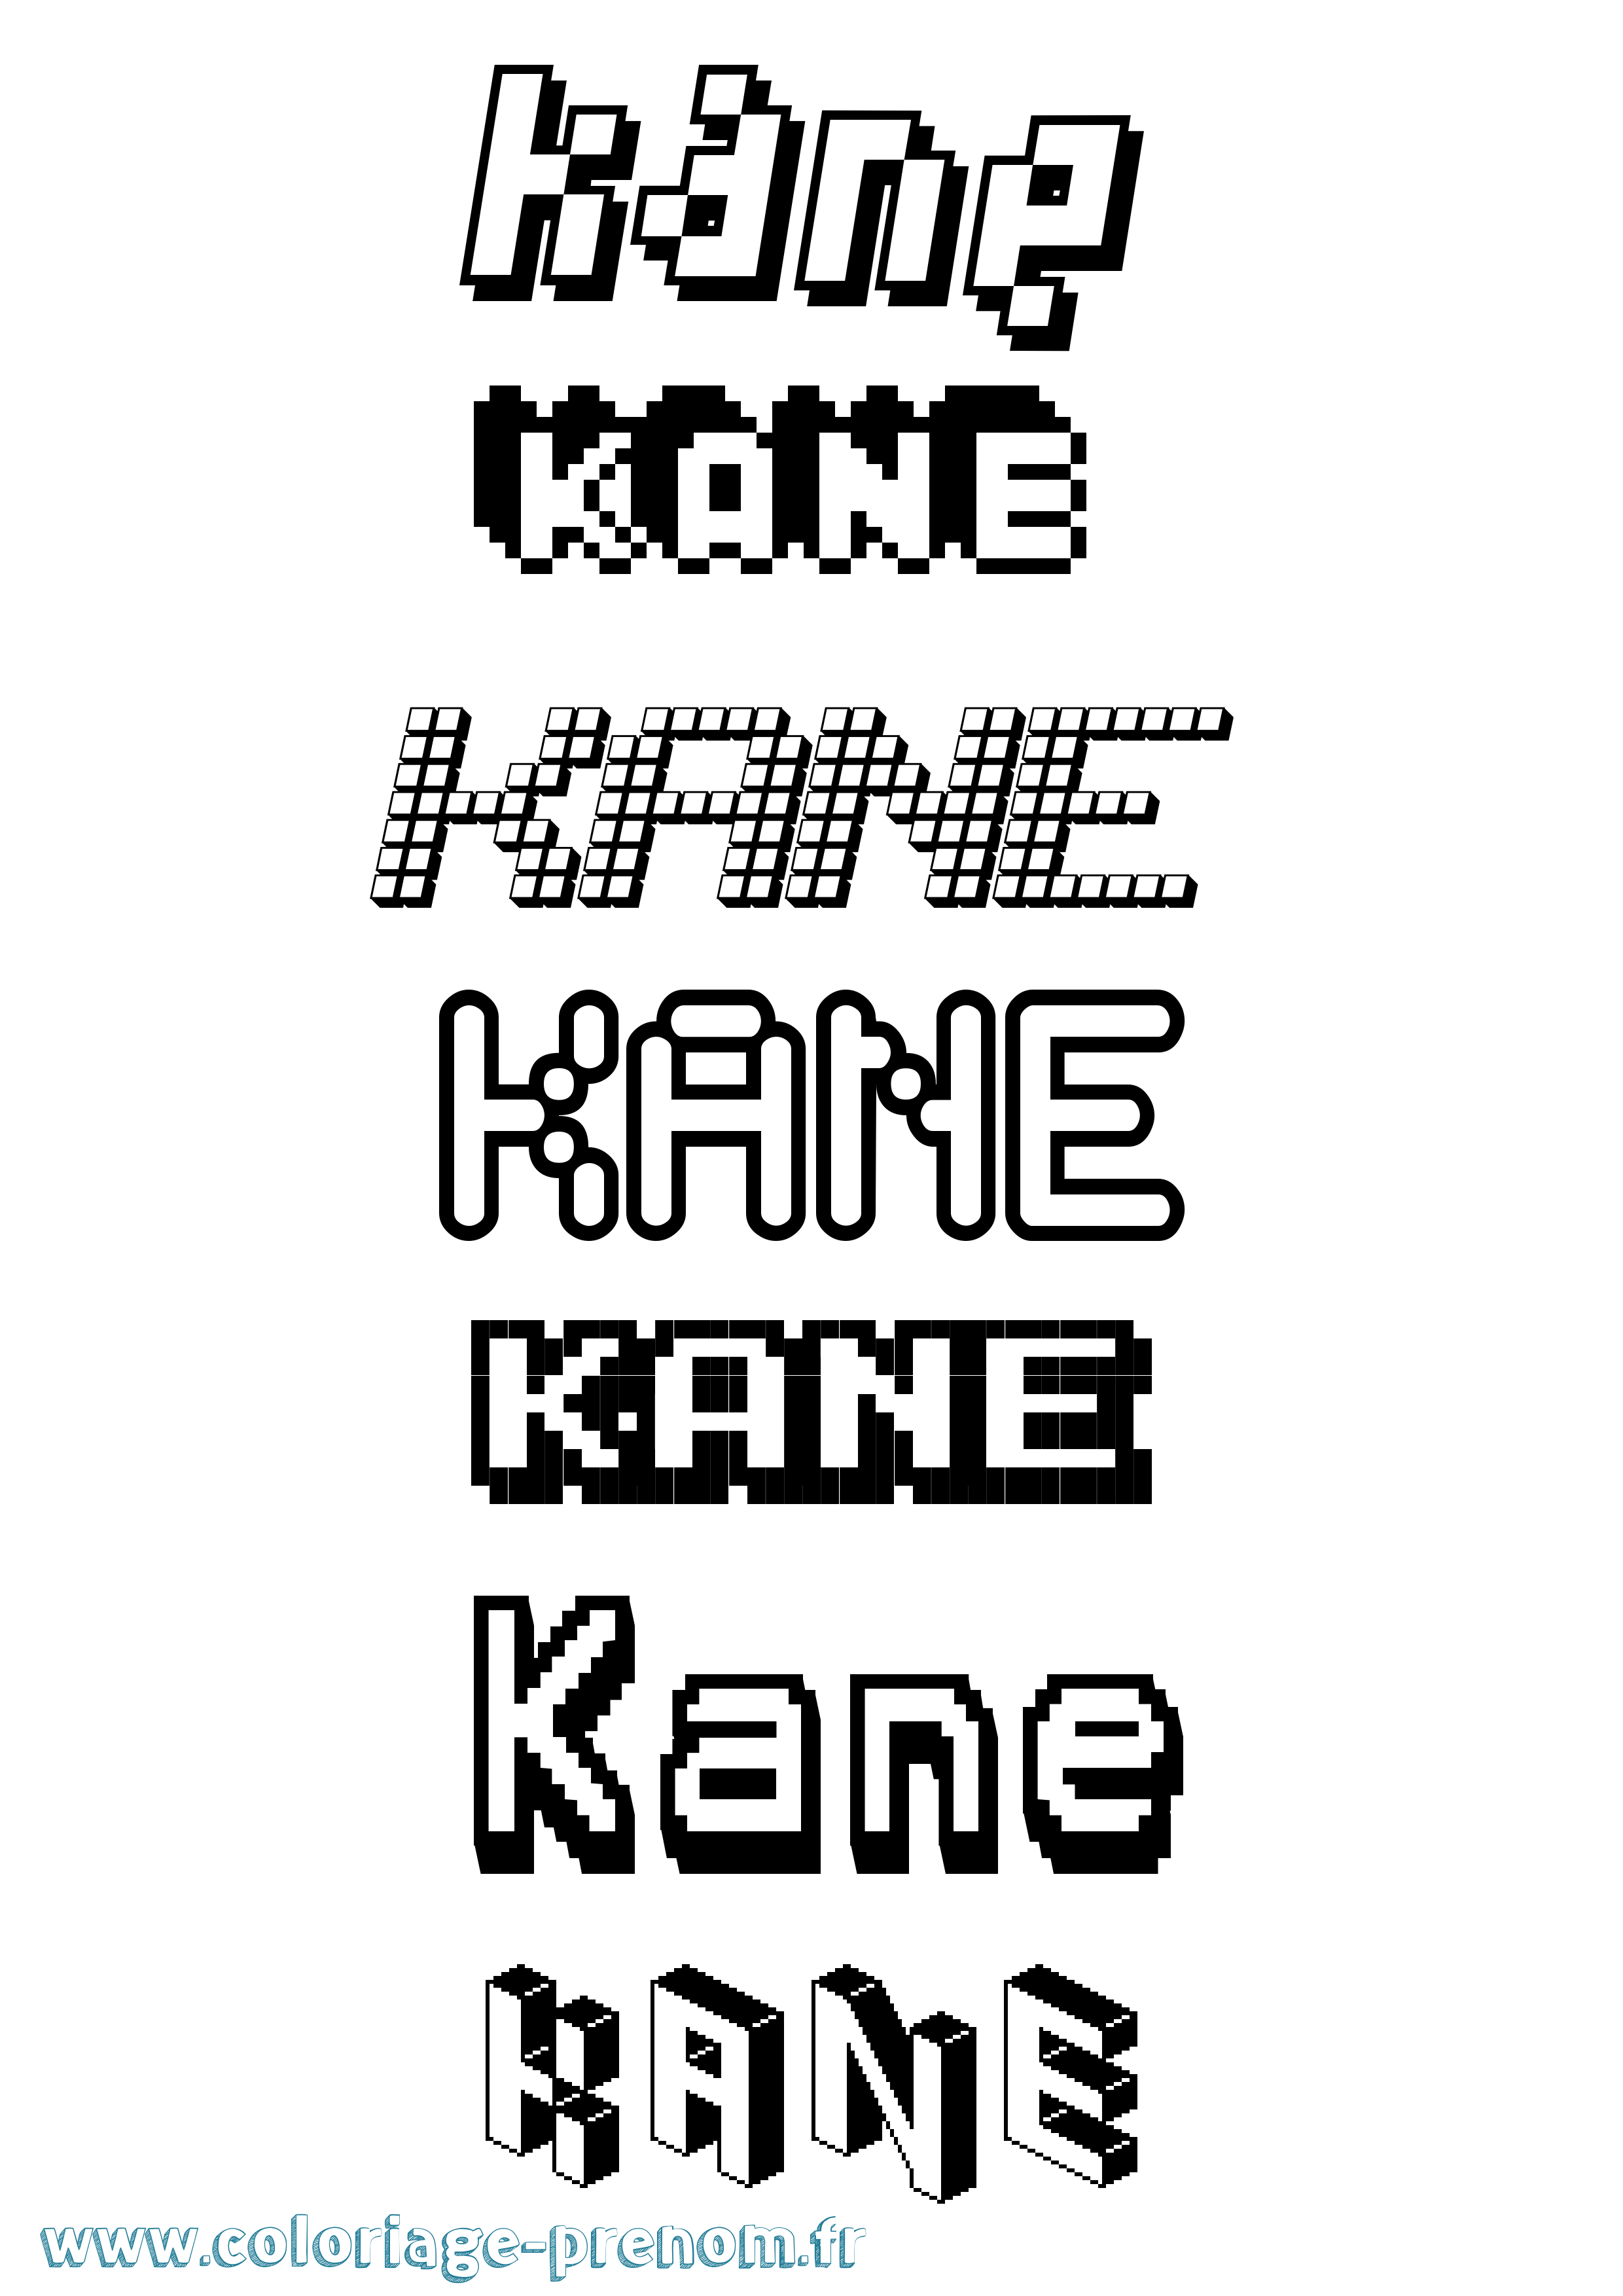 Coloriage prénom Kane Pixel